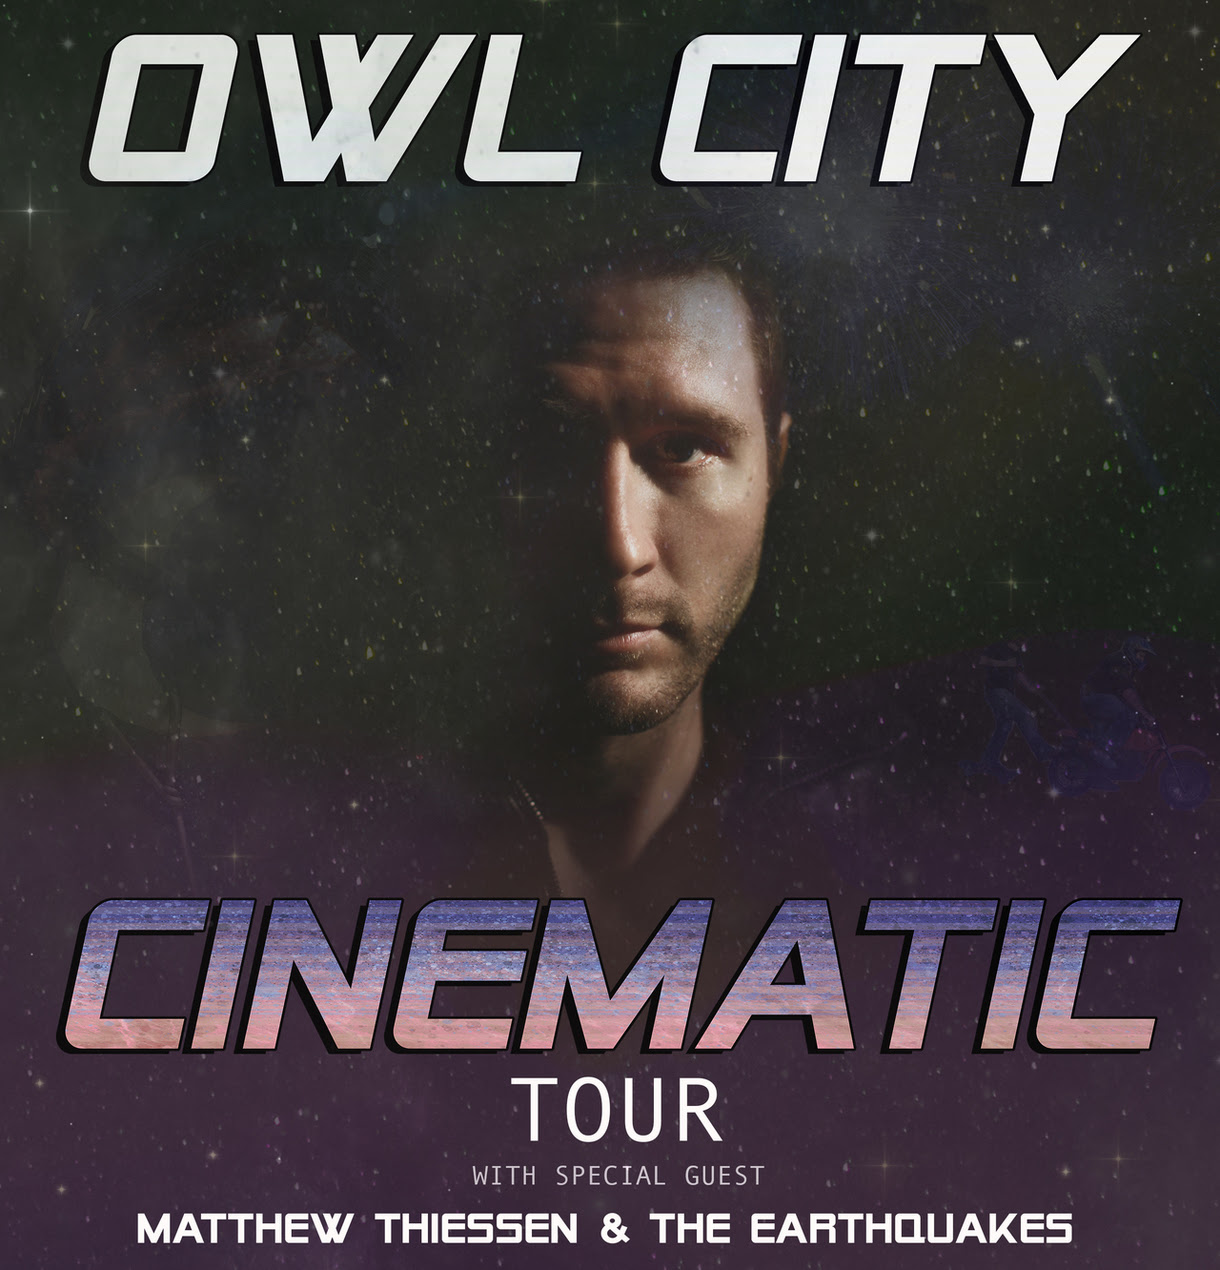 owl city tour